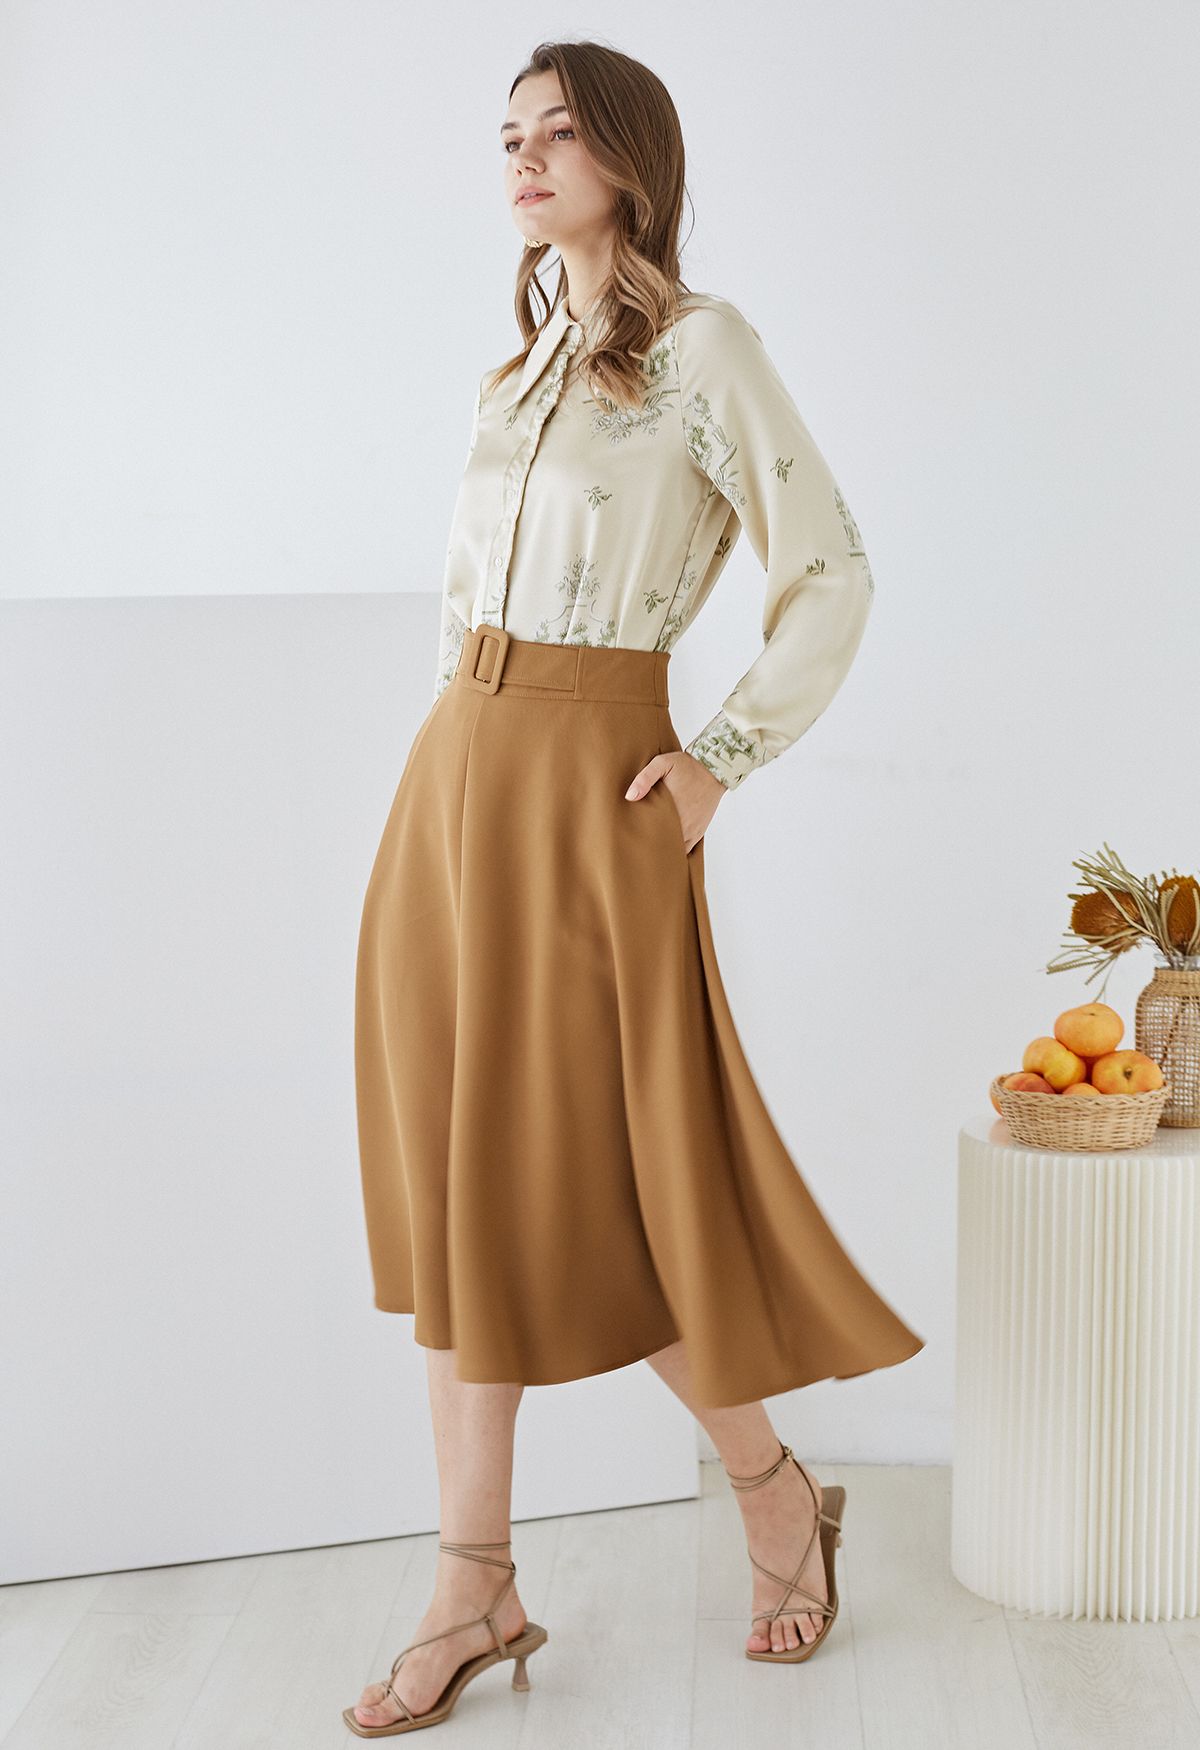 Fake Belt Casual A-Line Midi Skirt in Caramel